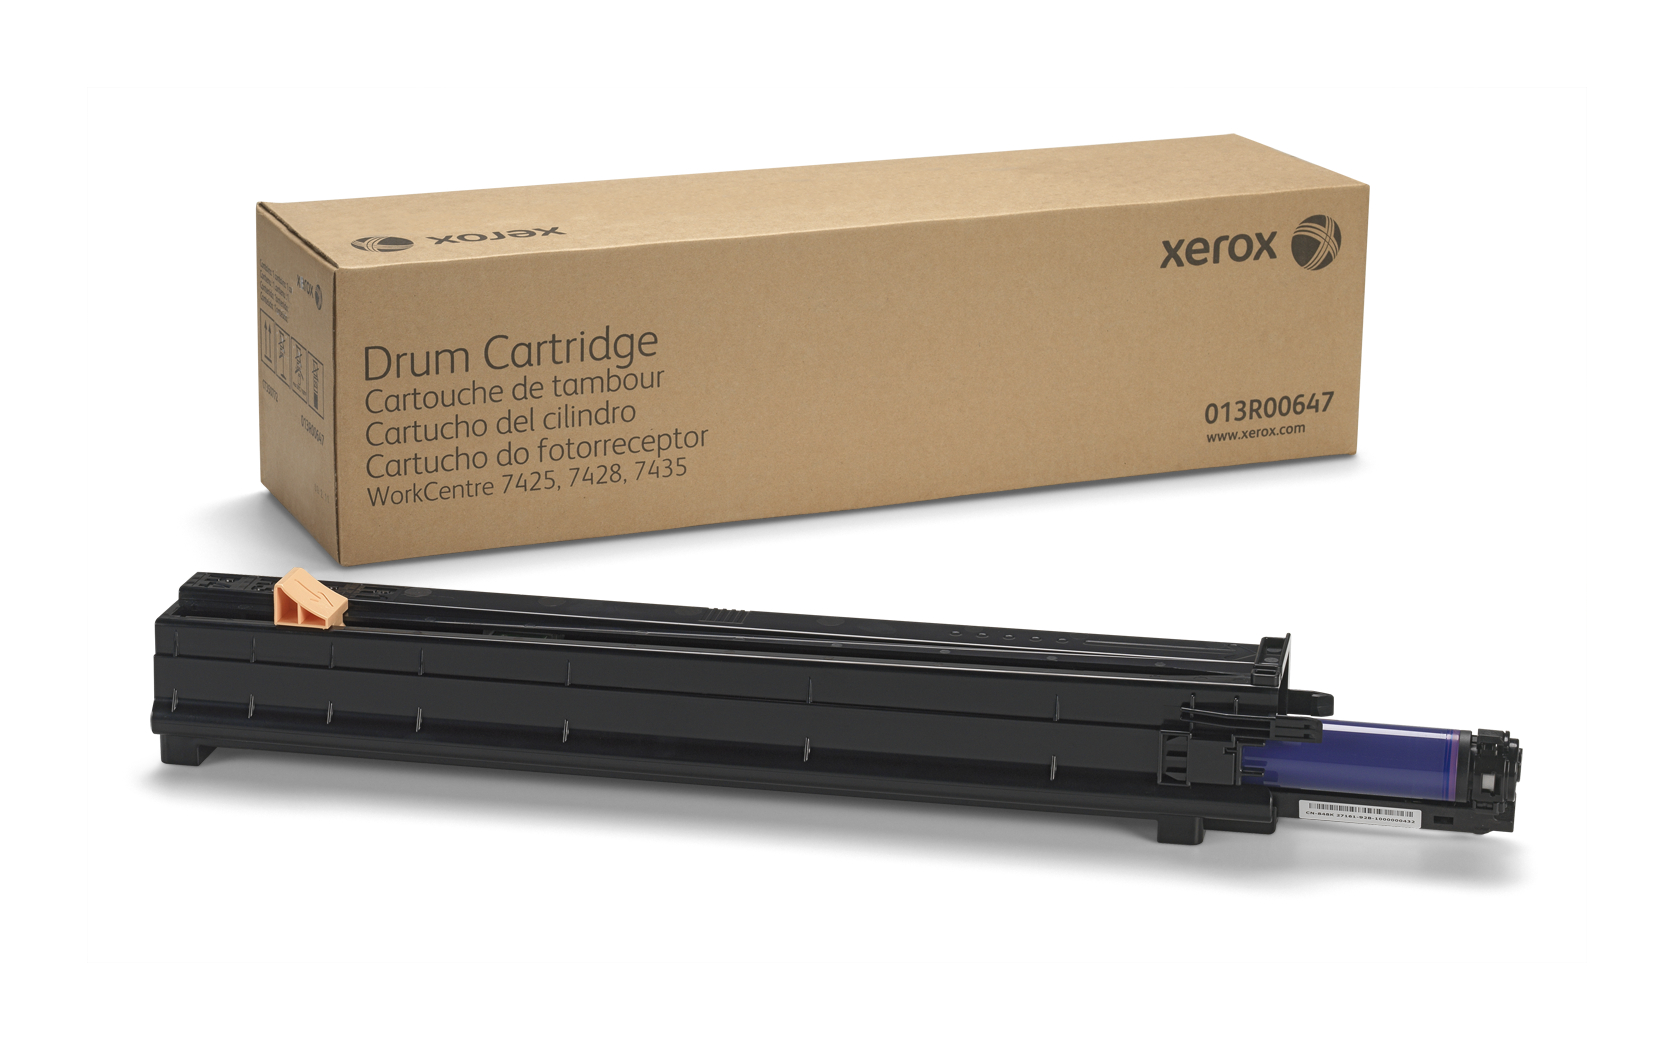 Drum Cartridge 013R00647 Genuine Xerox Supplies